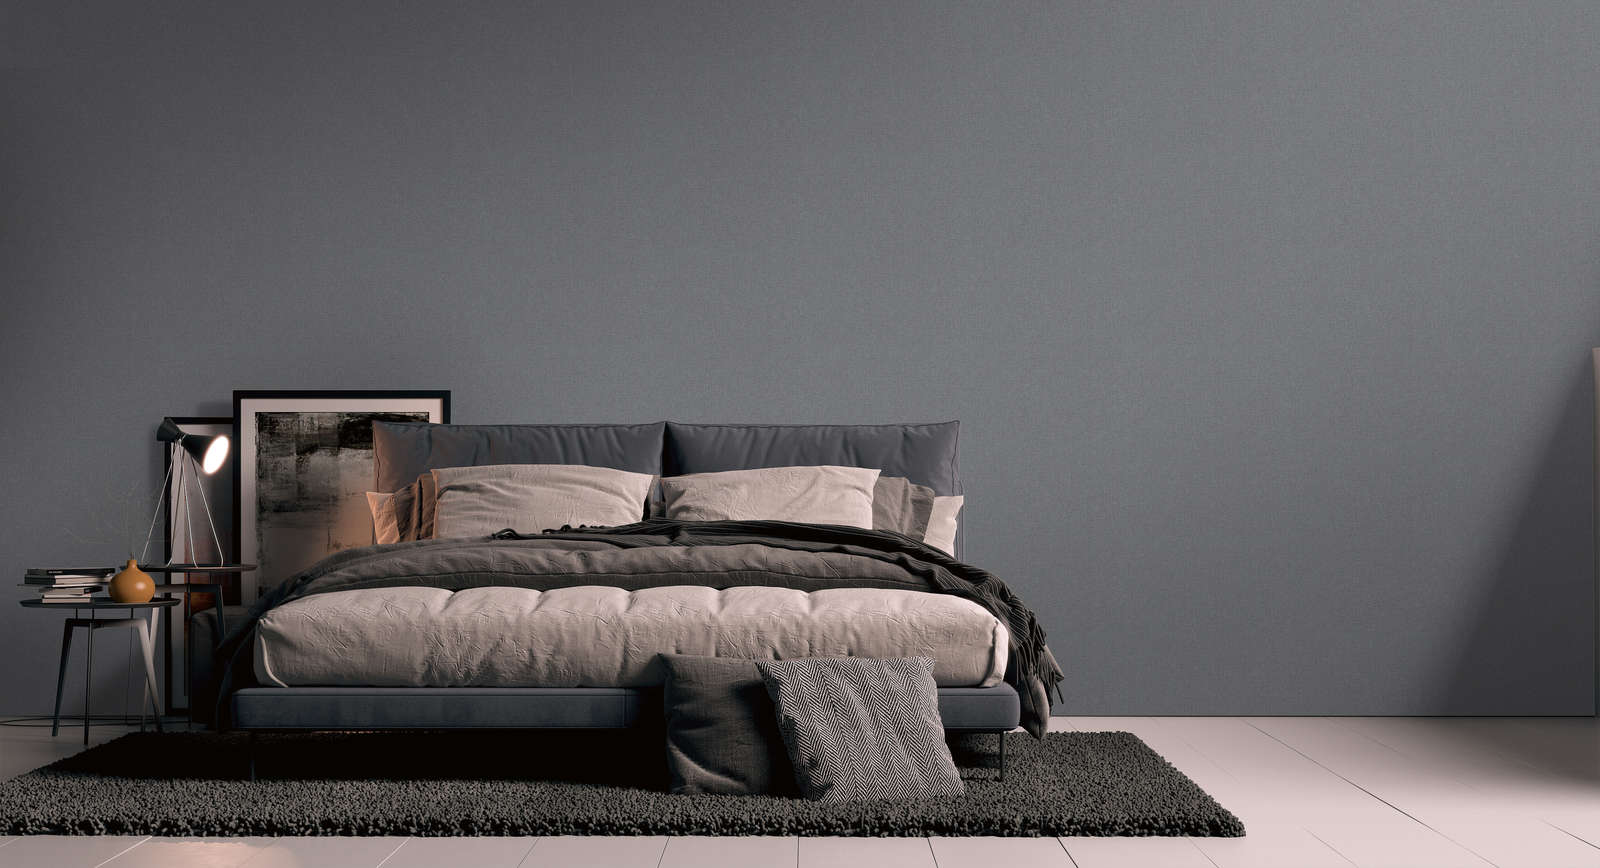             Single-coloured non-woven wallpaper with textile texture - anthracite, grey
        